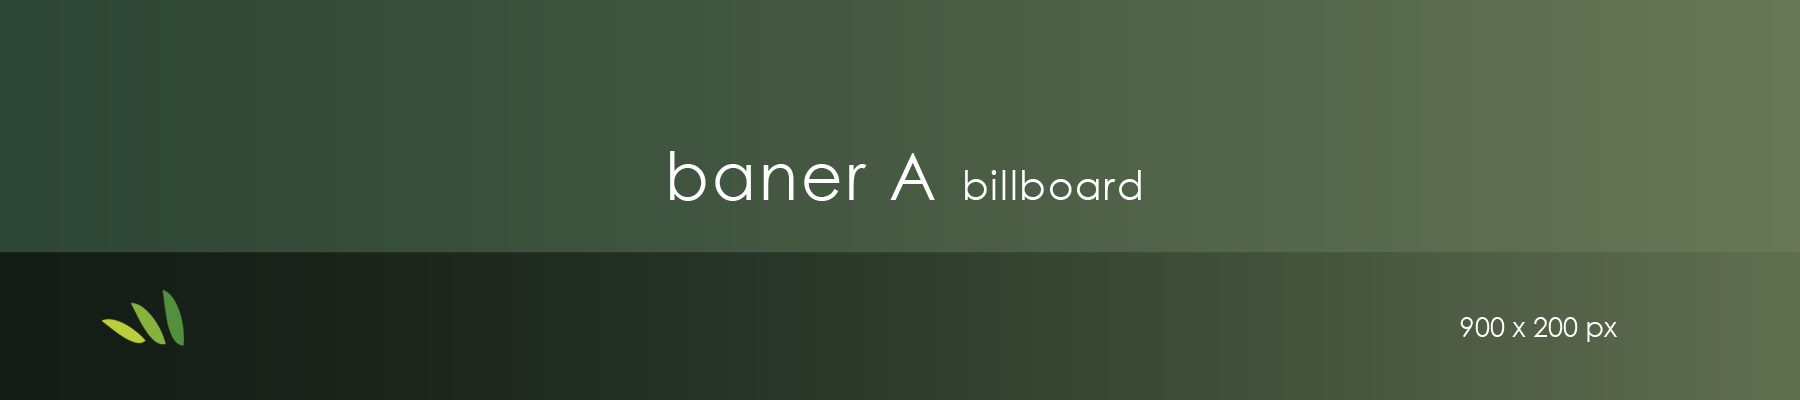 Baner A - Billboard - Reklama Portal Ogrodniczy